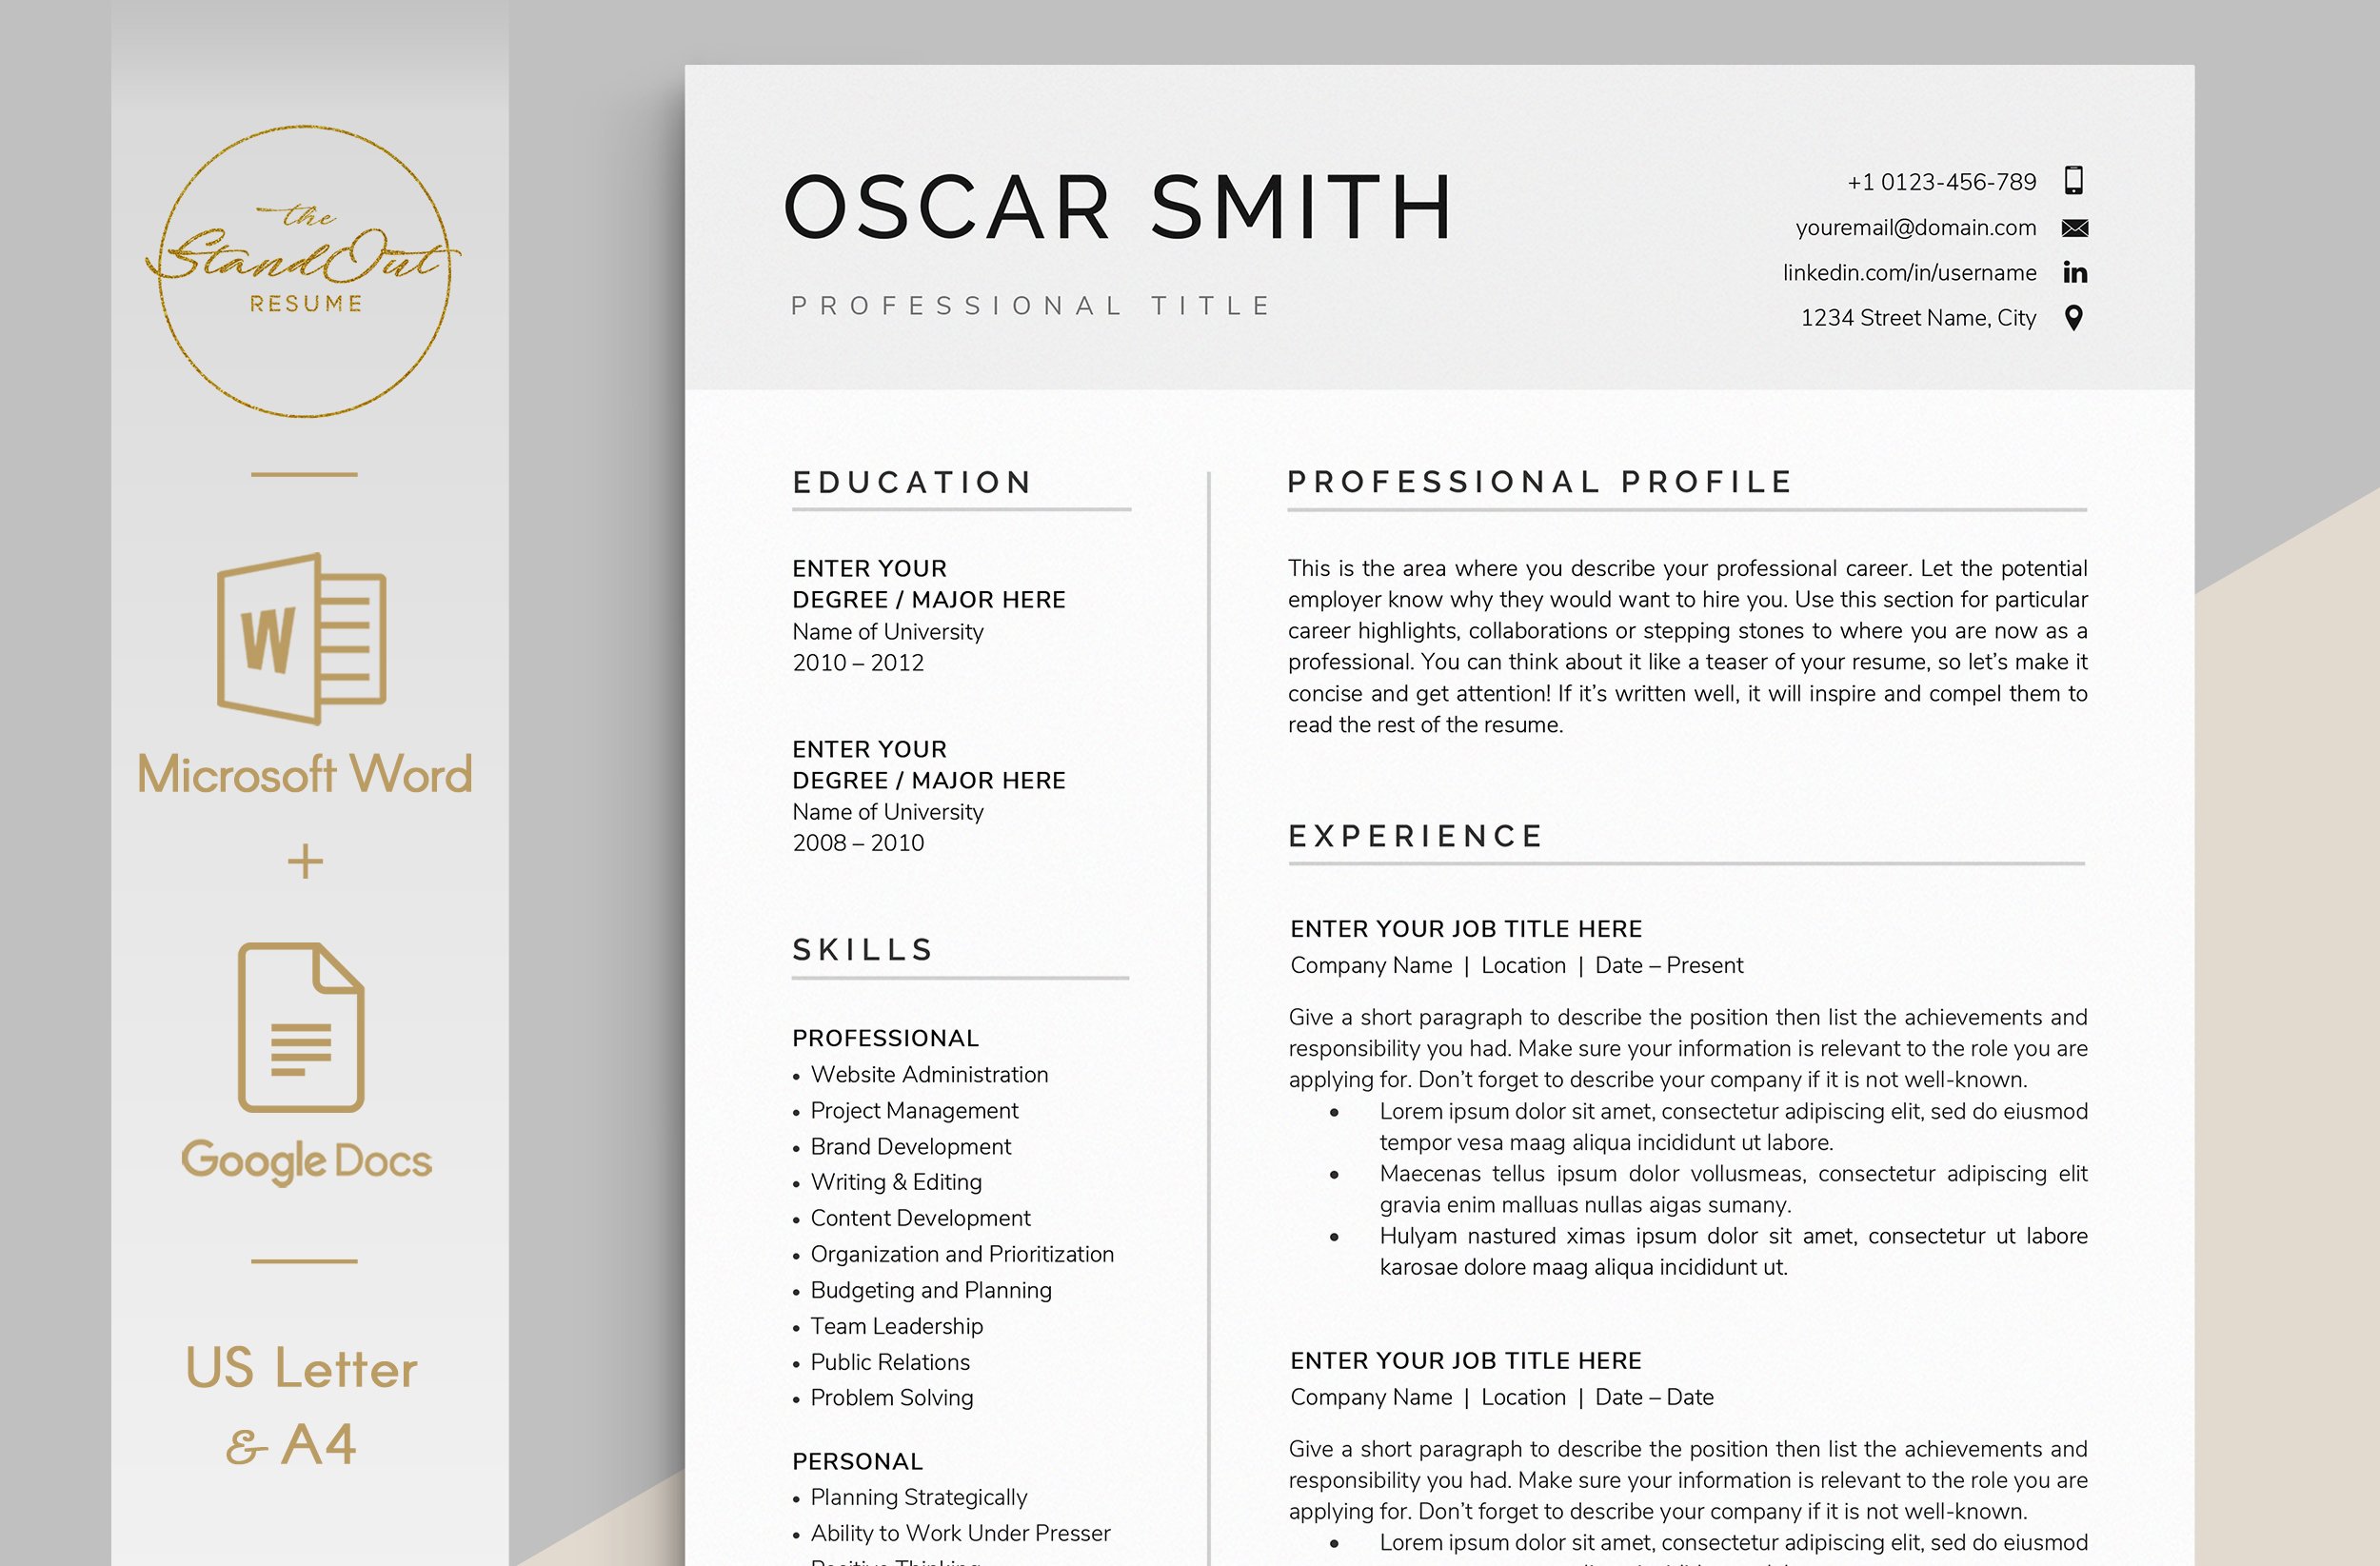 Resume/CV Template - OSCAR cover image.